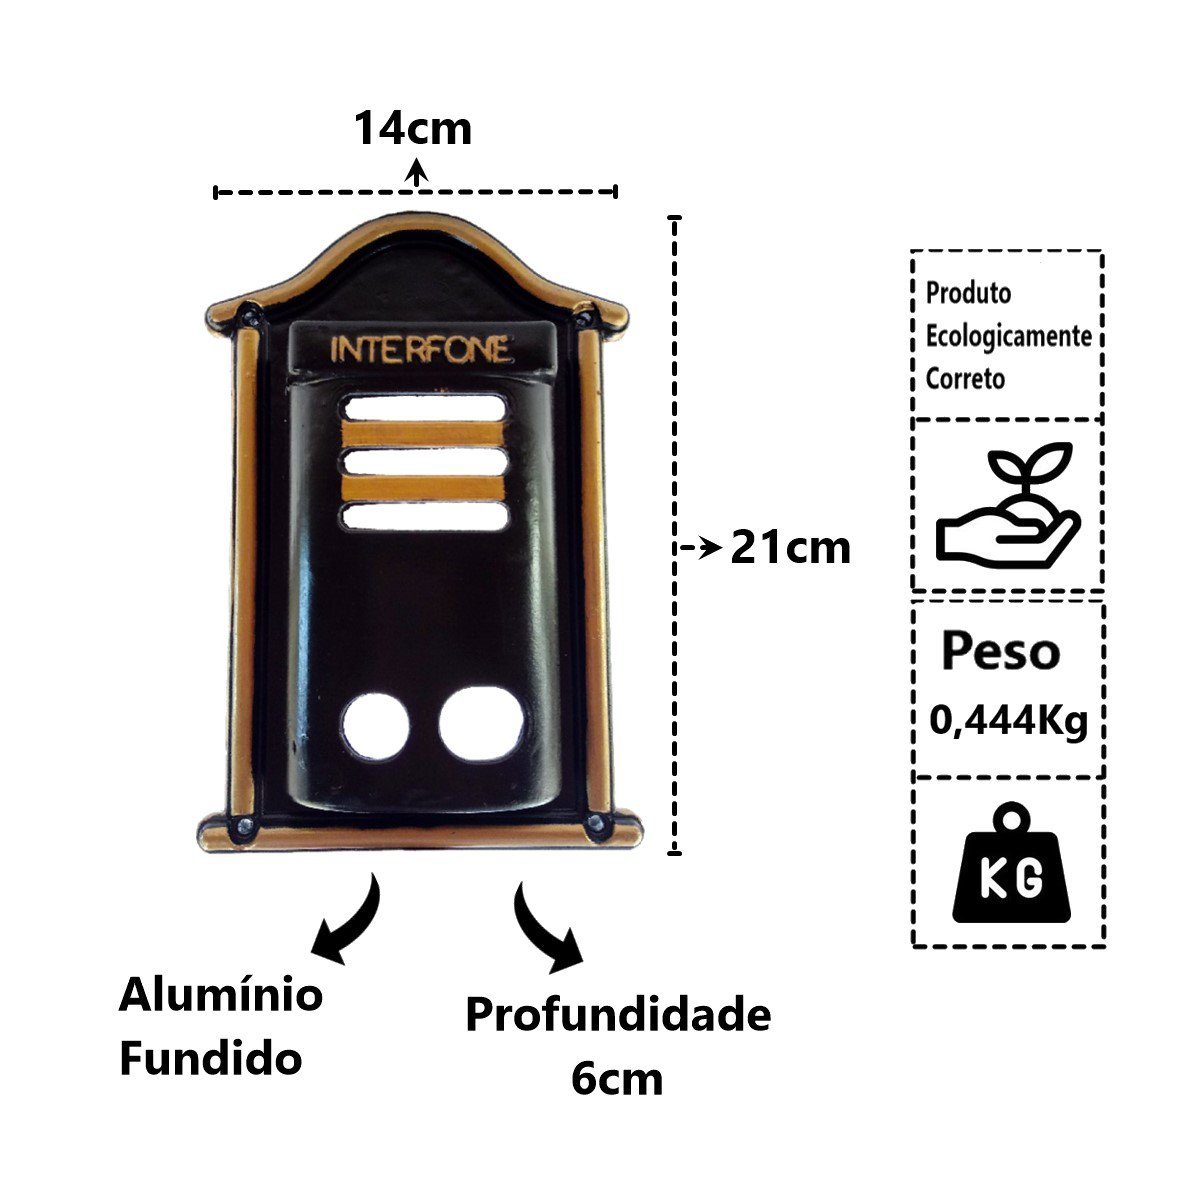 Protetor Interfone Caixa de Alumínio Fundido Ouro 21x14x6cm Brassol - 2